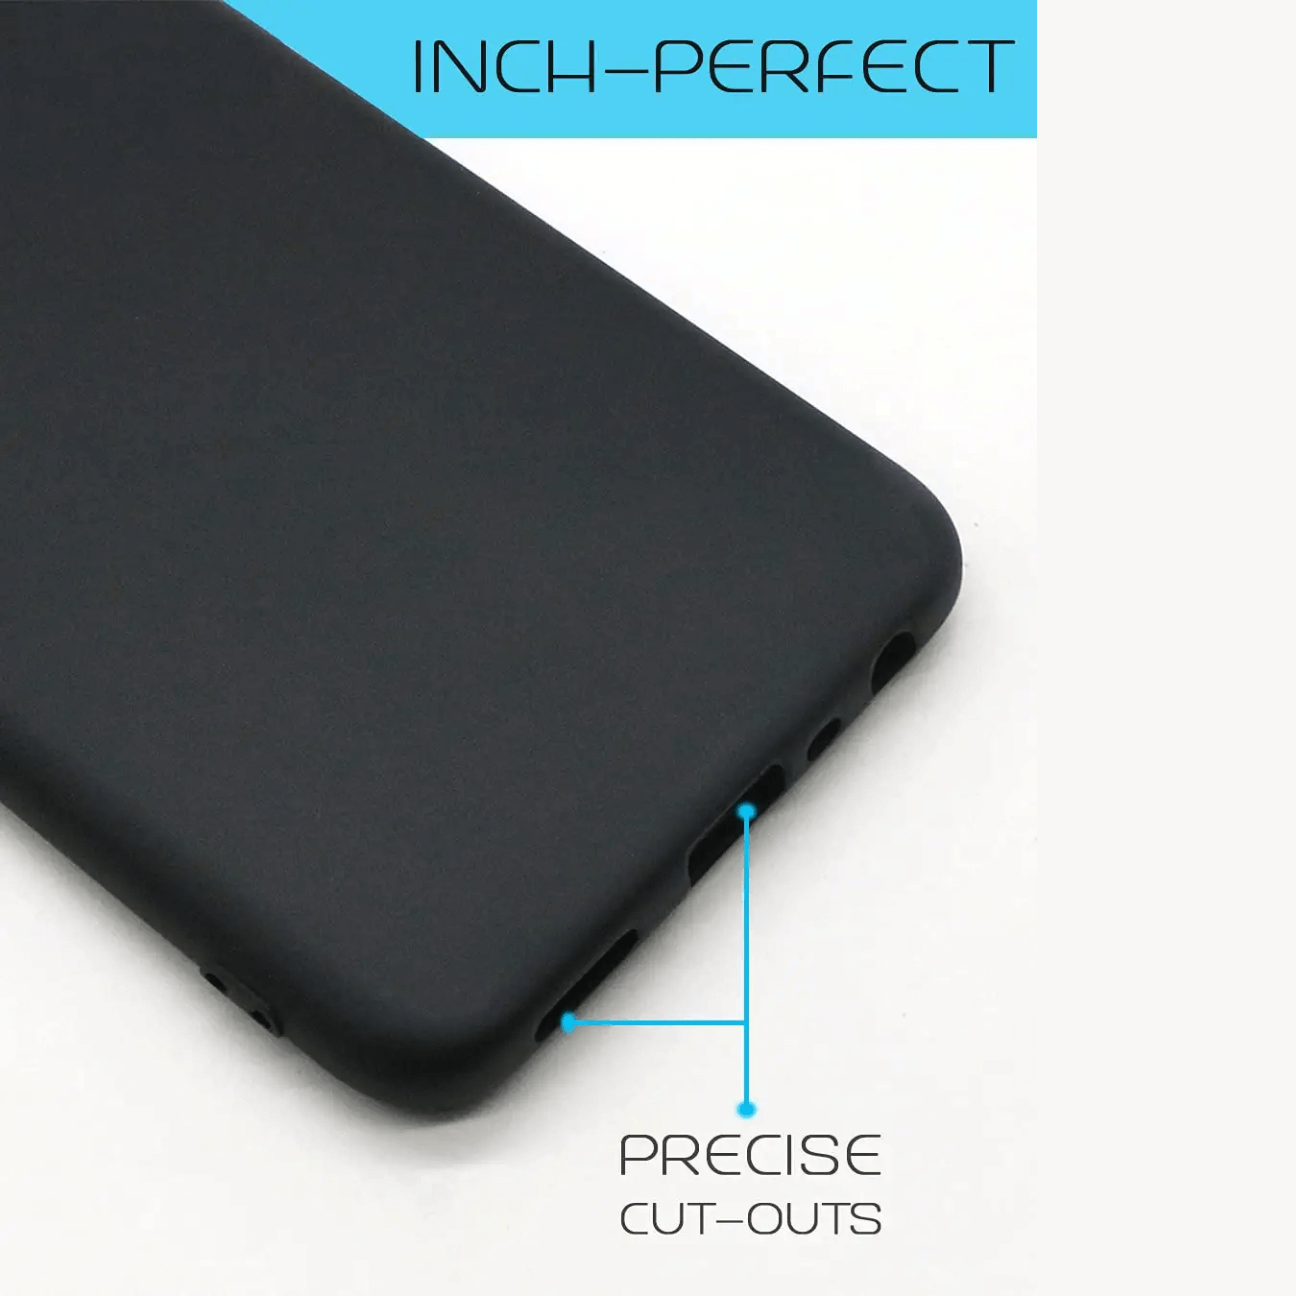 Xiaomi Redmi 7A Black Soft Silicone Phone Case Image